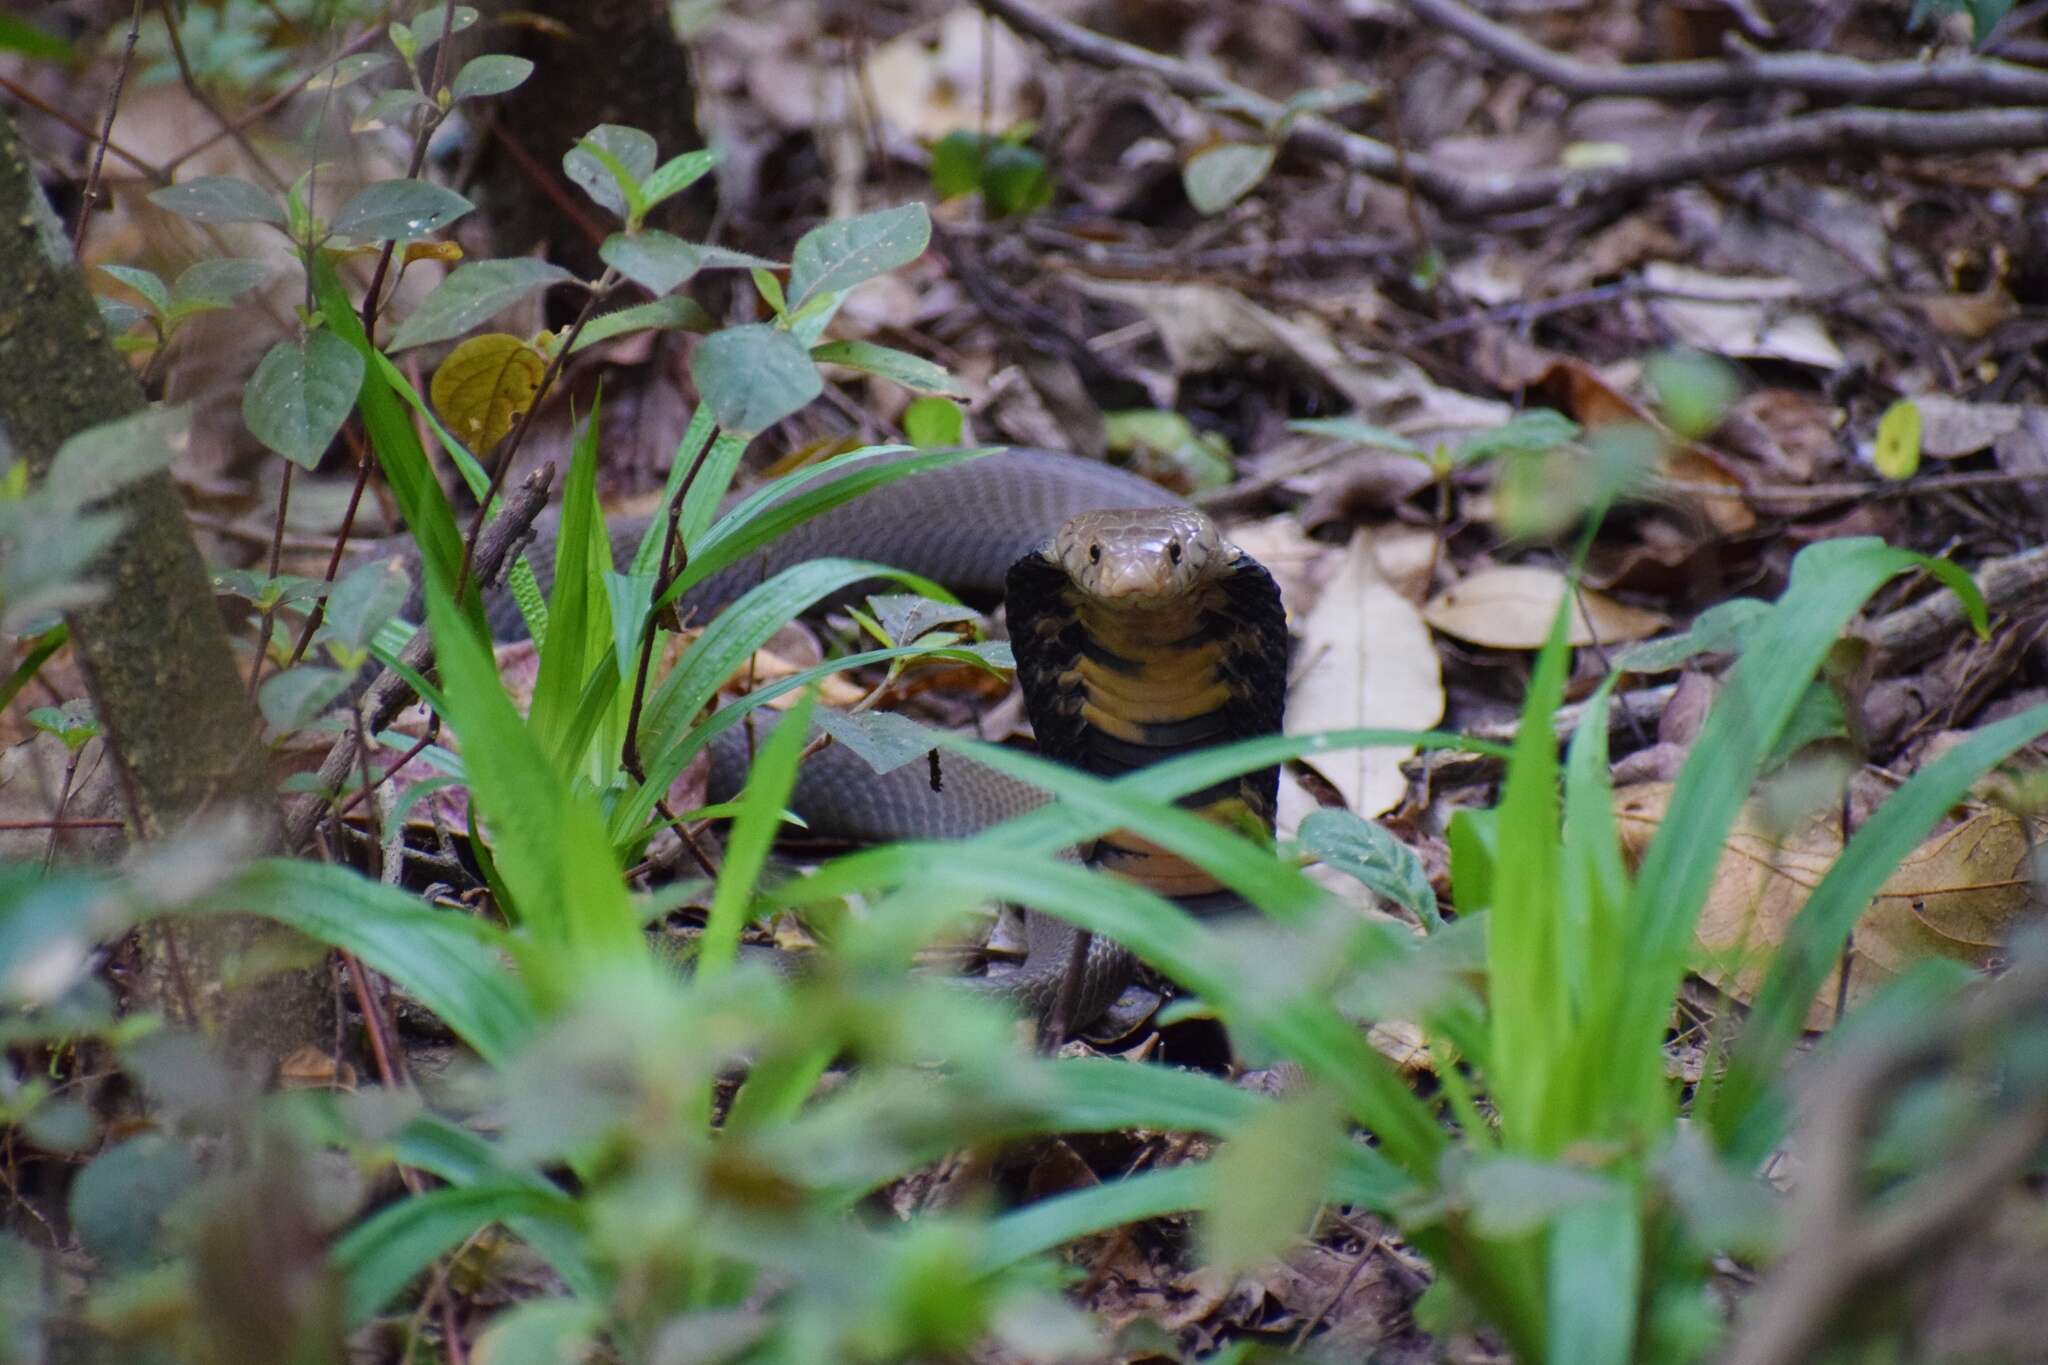 Image of Mozambique spitting cobra